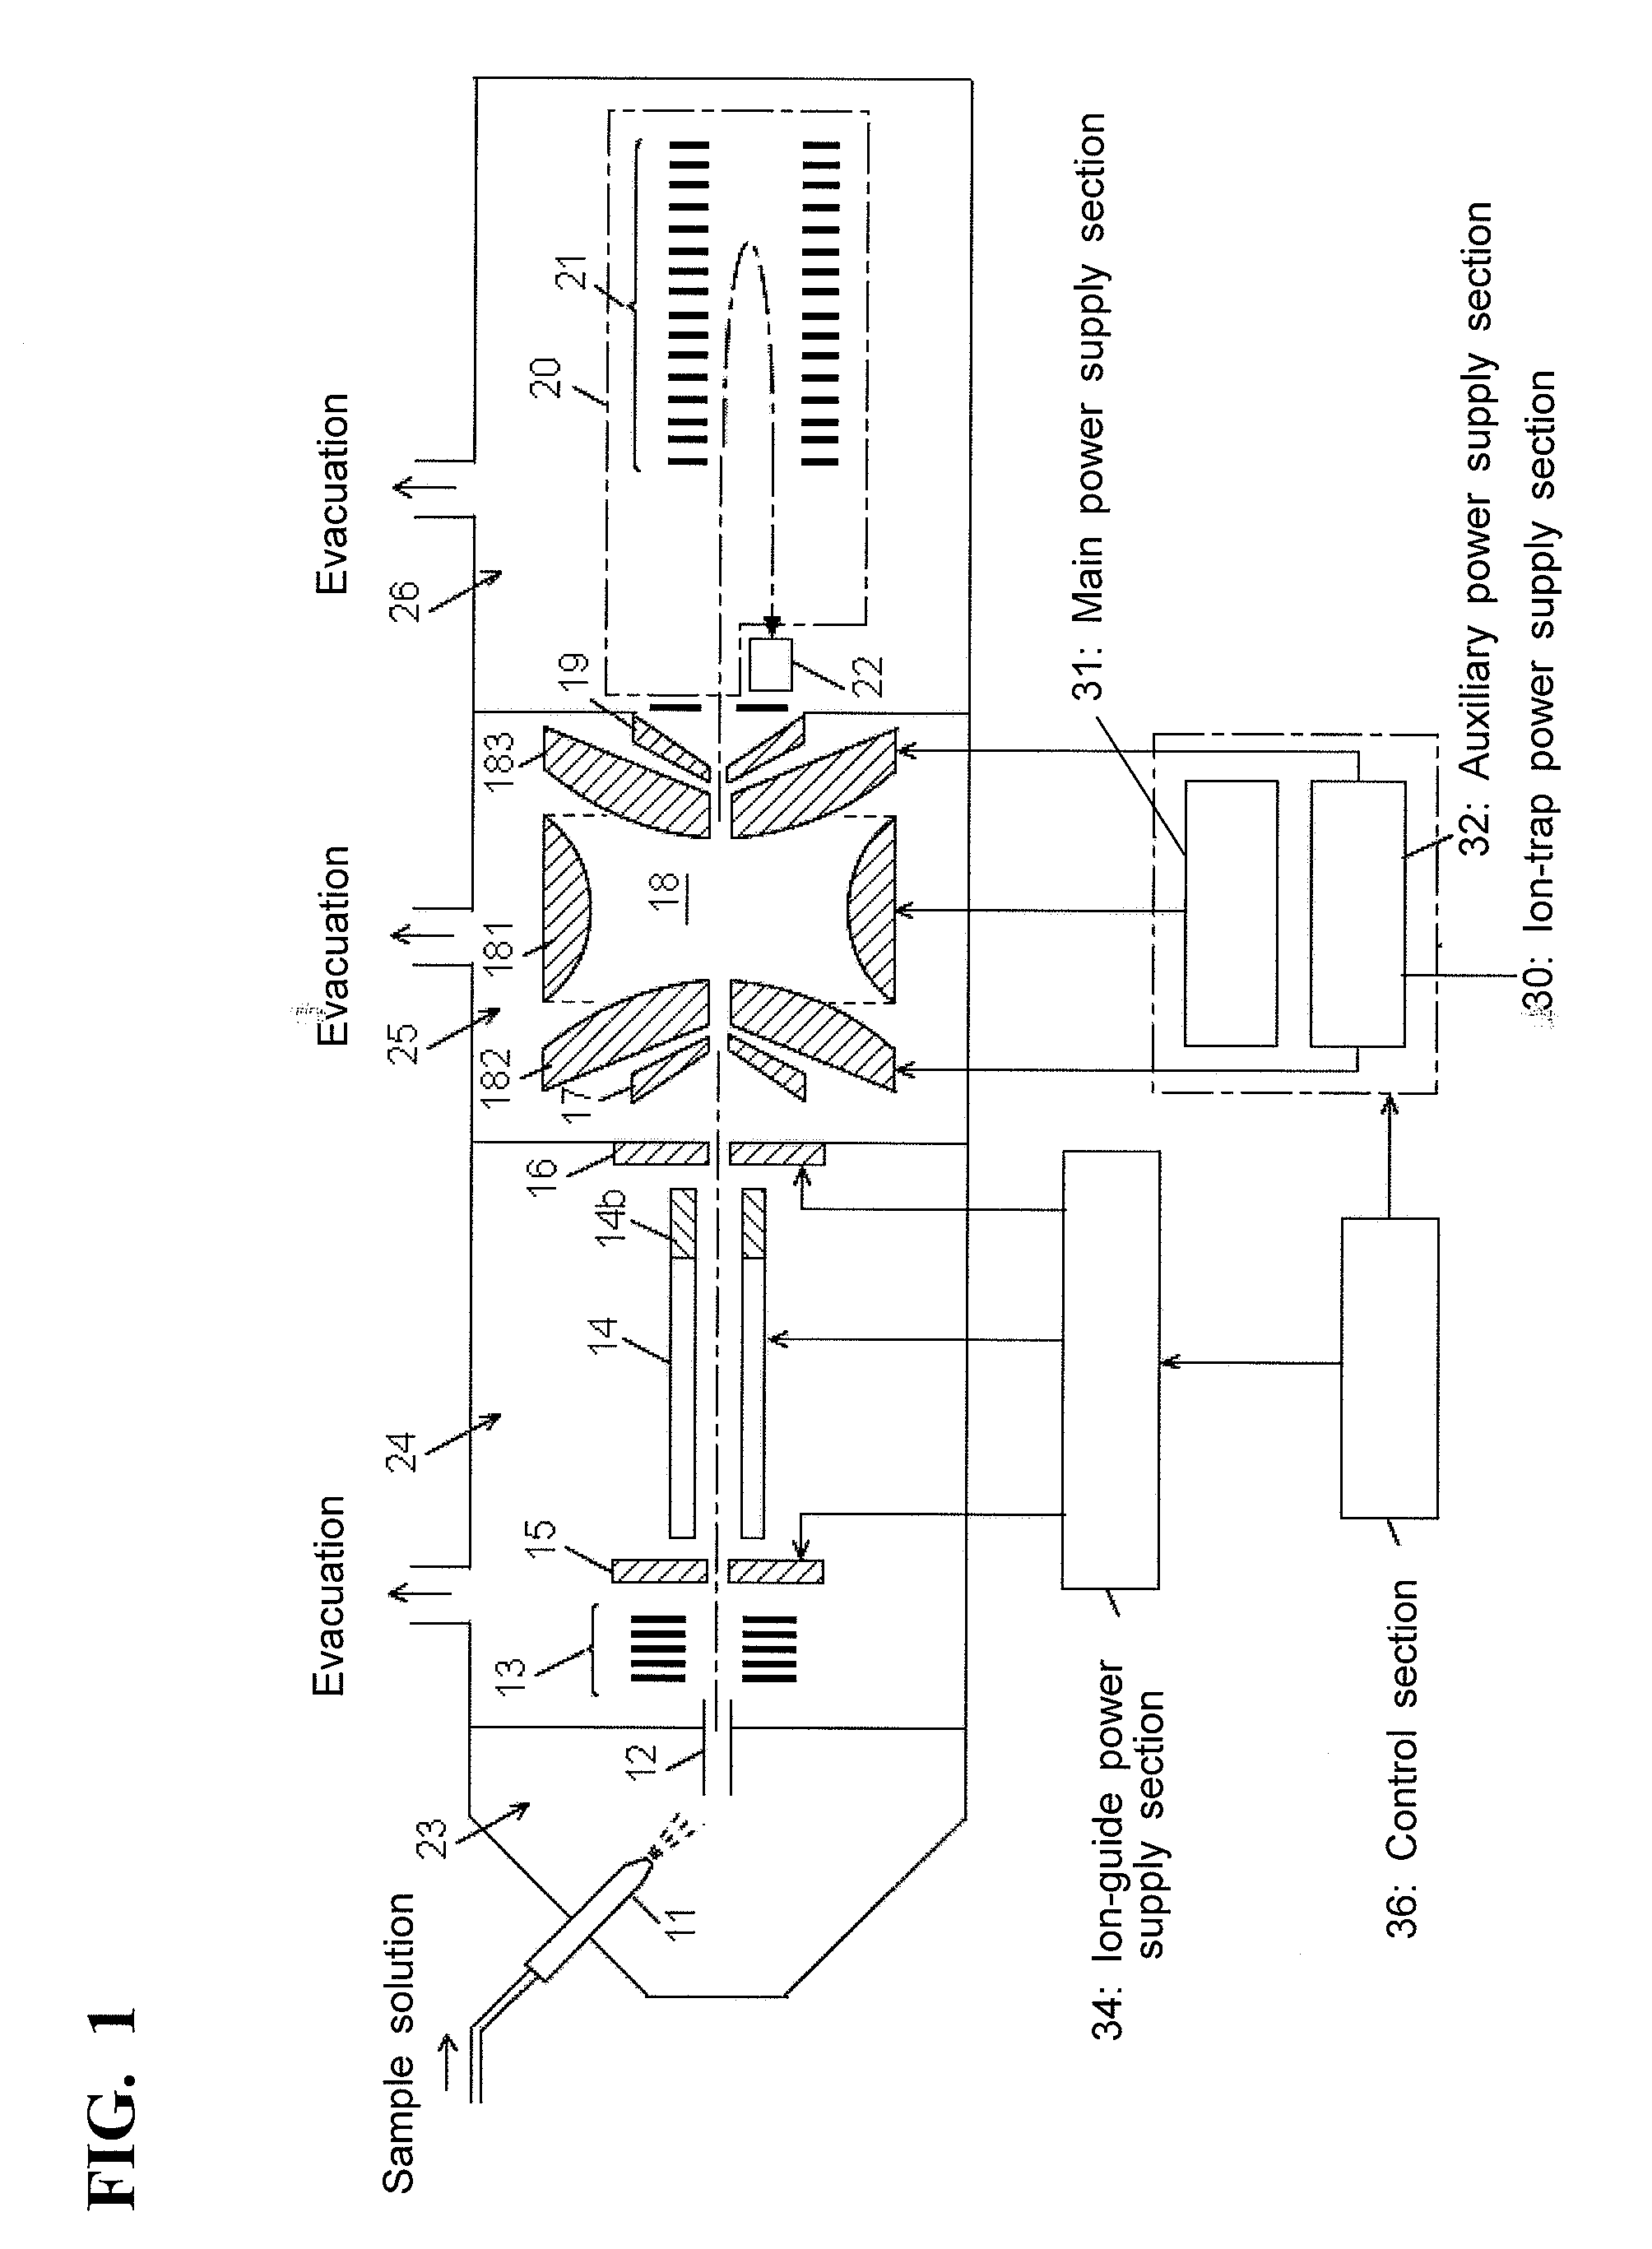 Mass spectrometry apparatus and method